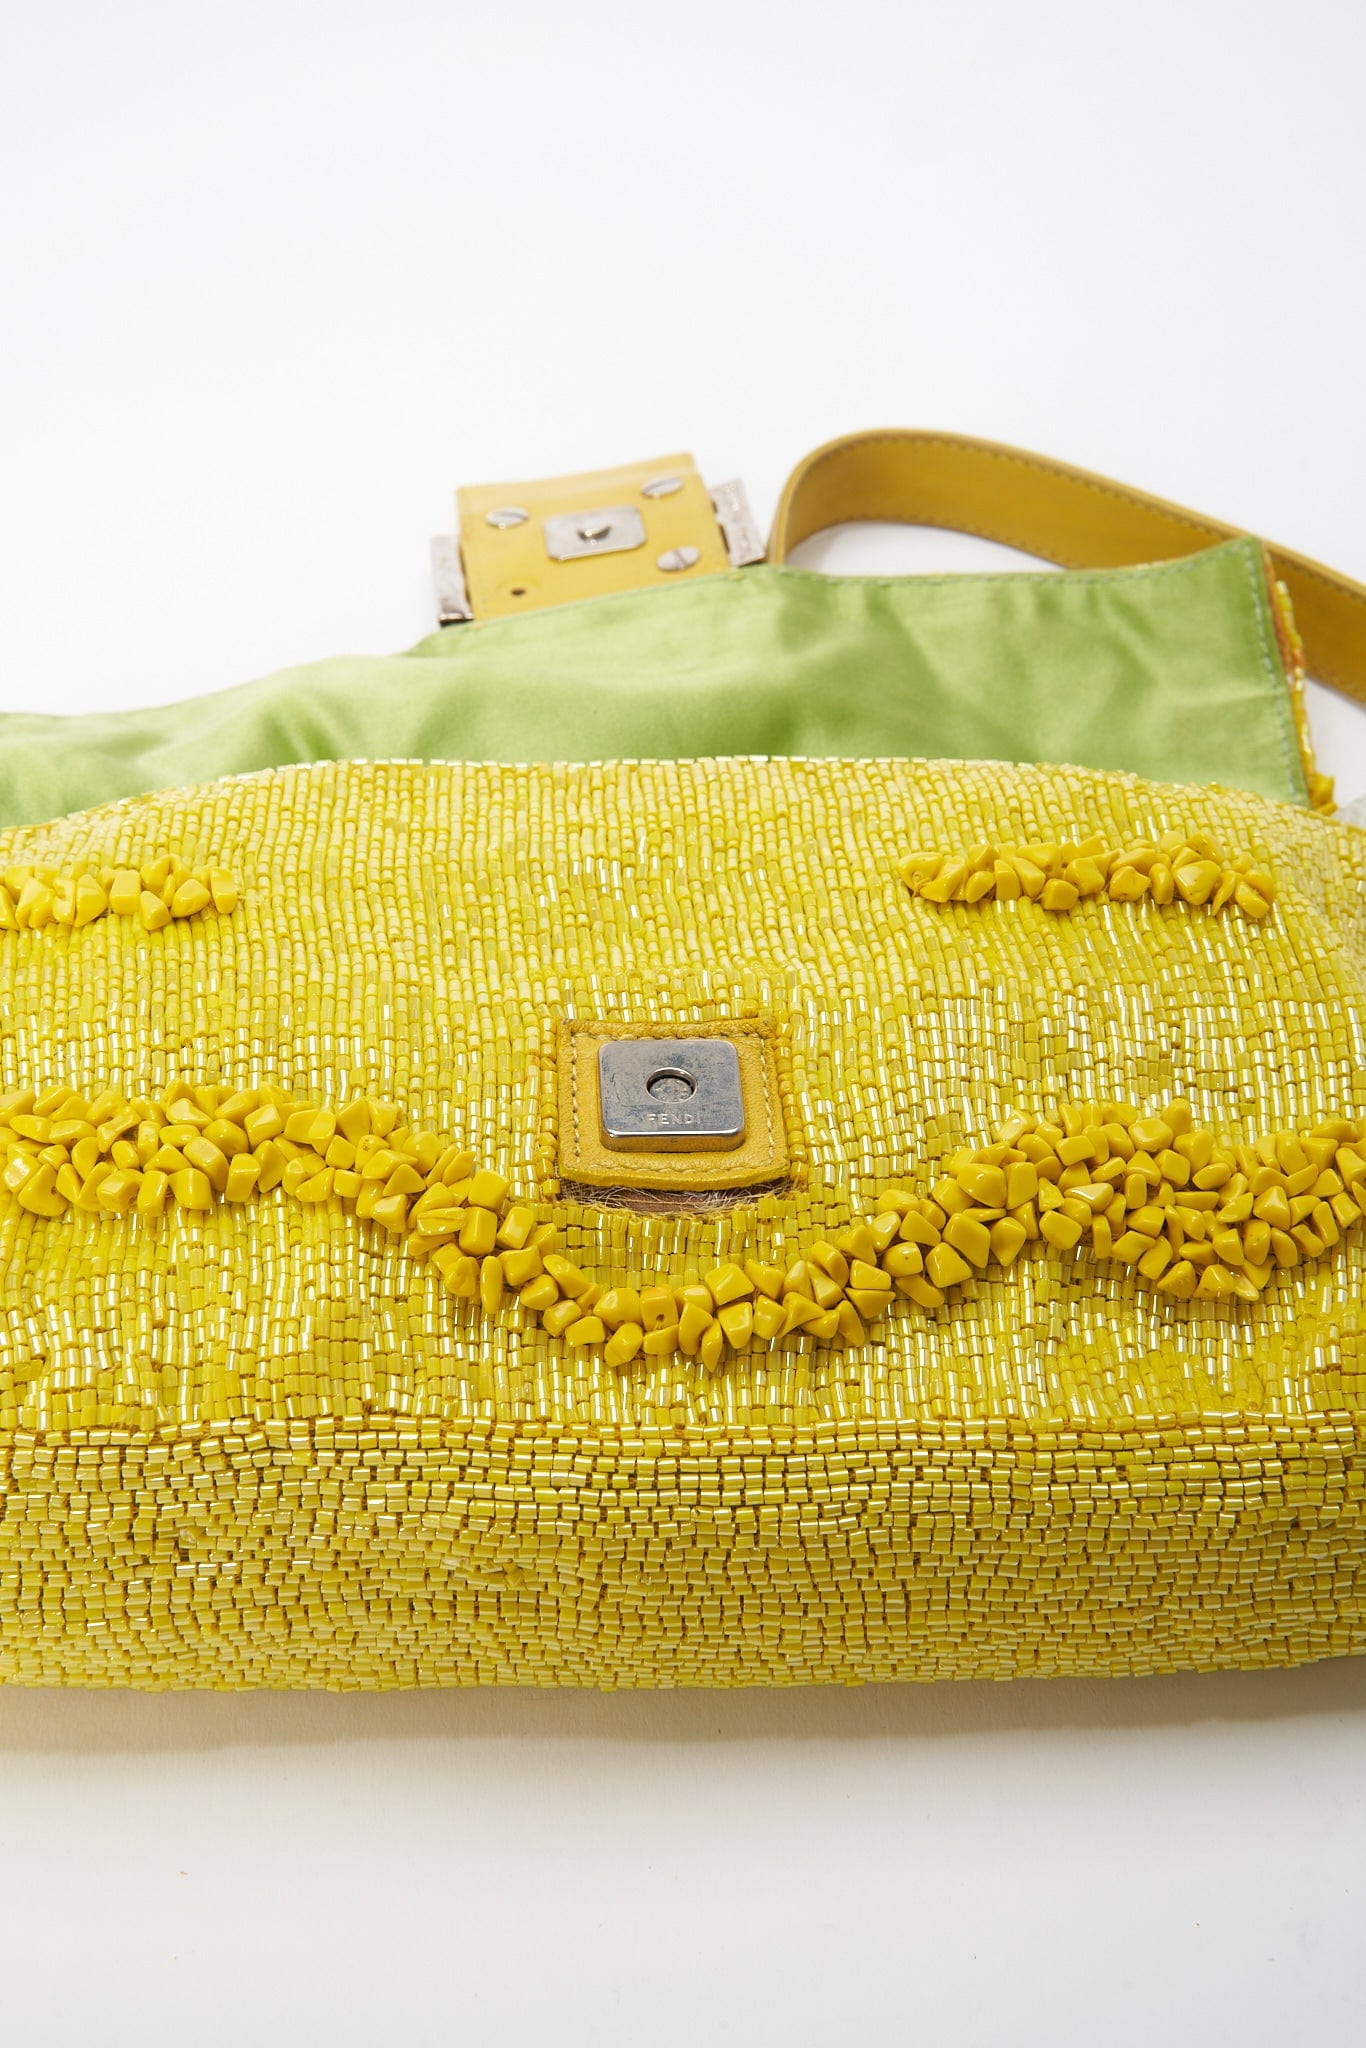 Fendi Gialla Yellow Beaded Baguette Bag – The Hosta